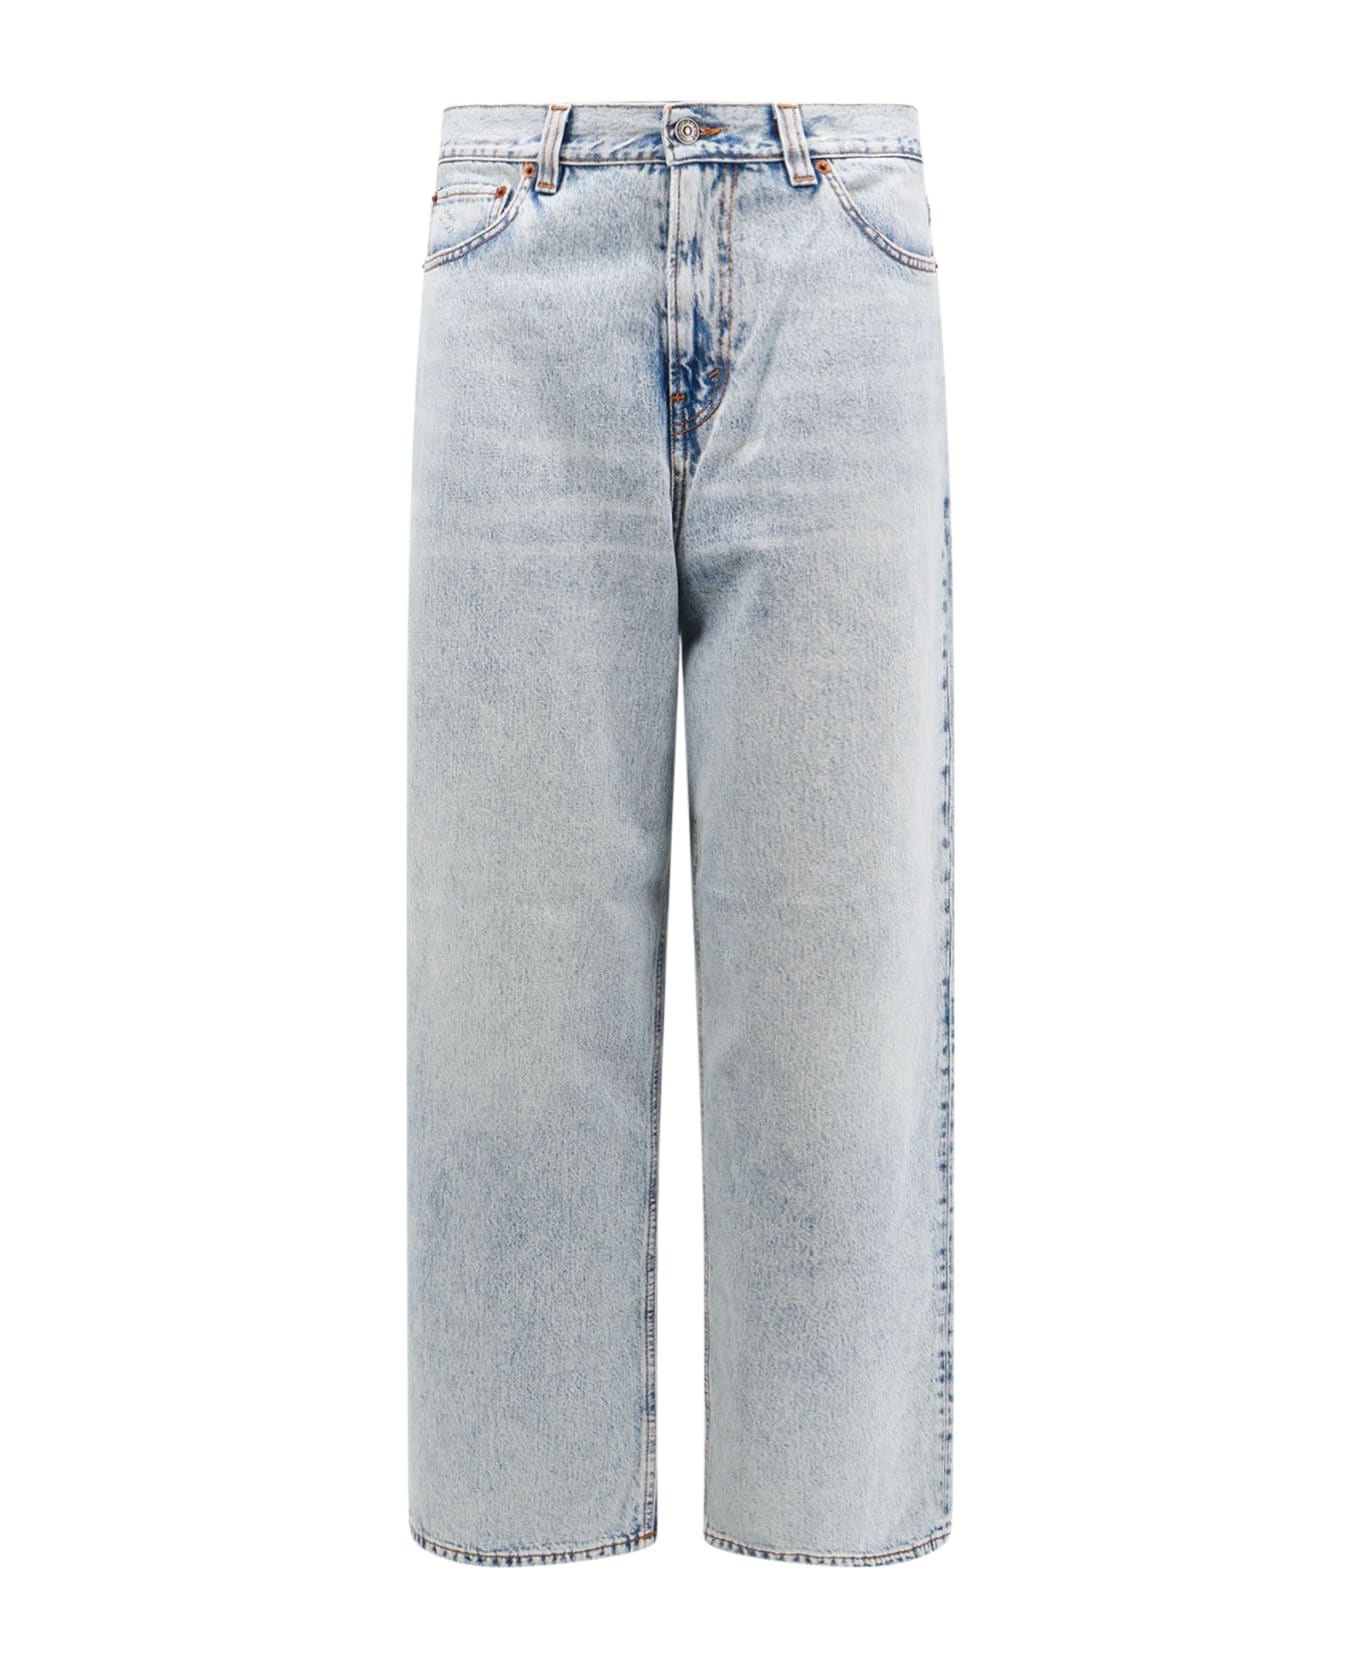 Haikure Jo Stromboli Jeans - Stromboli blue